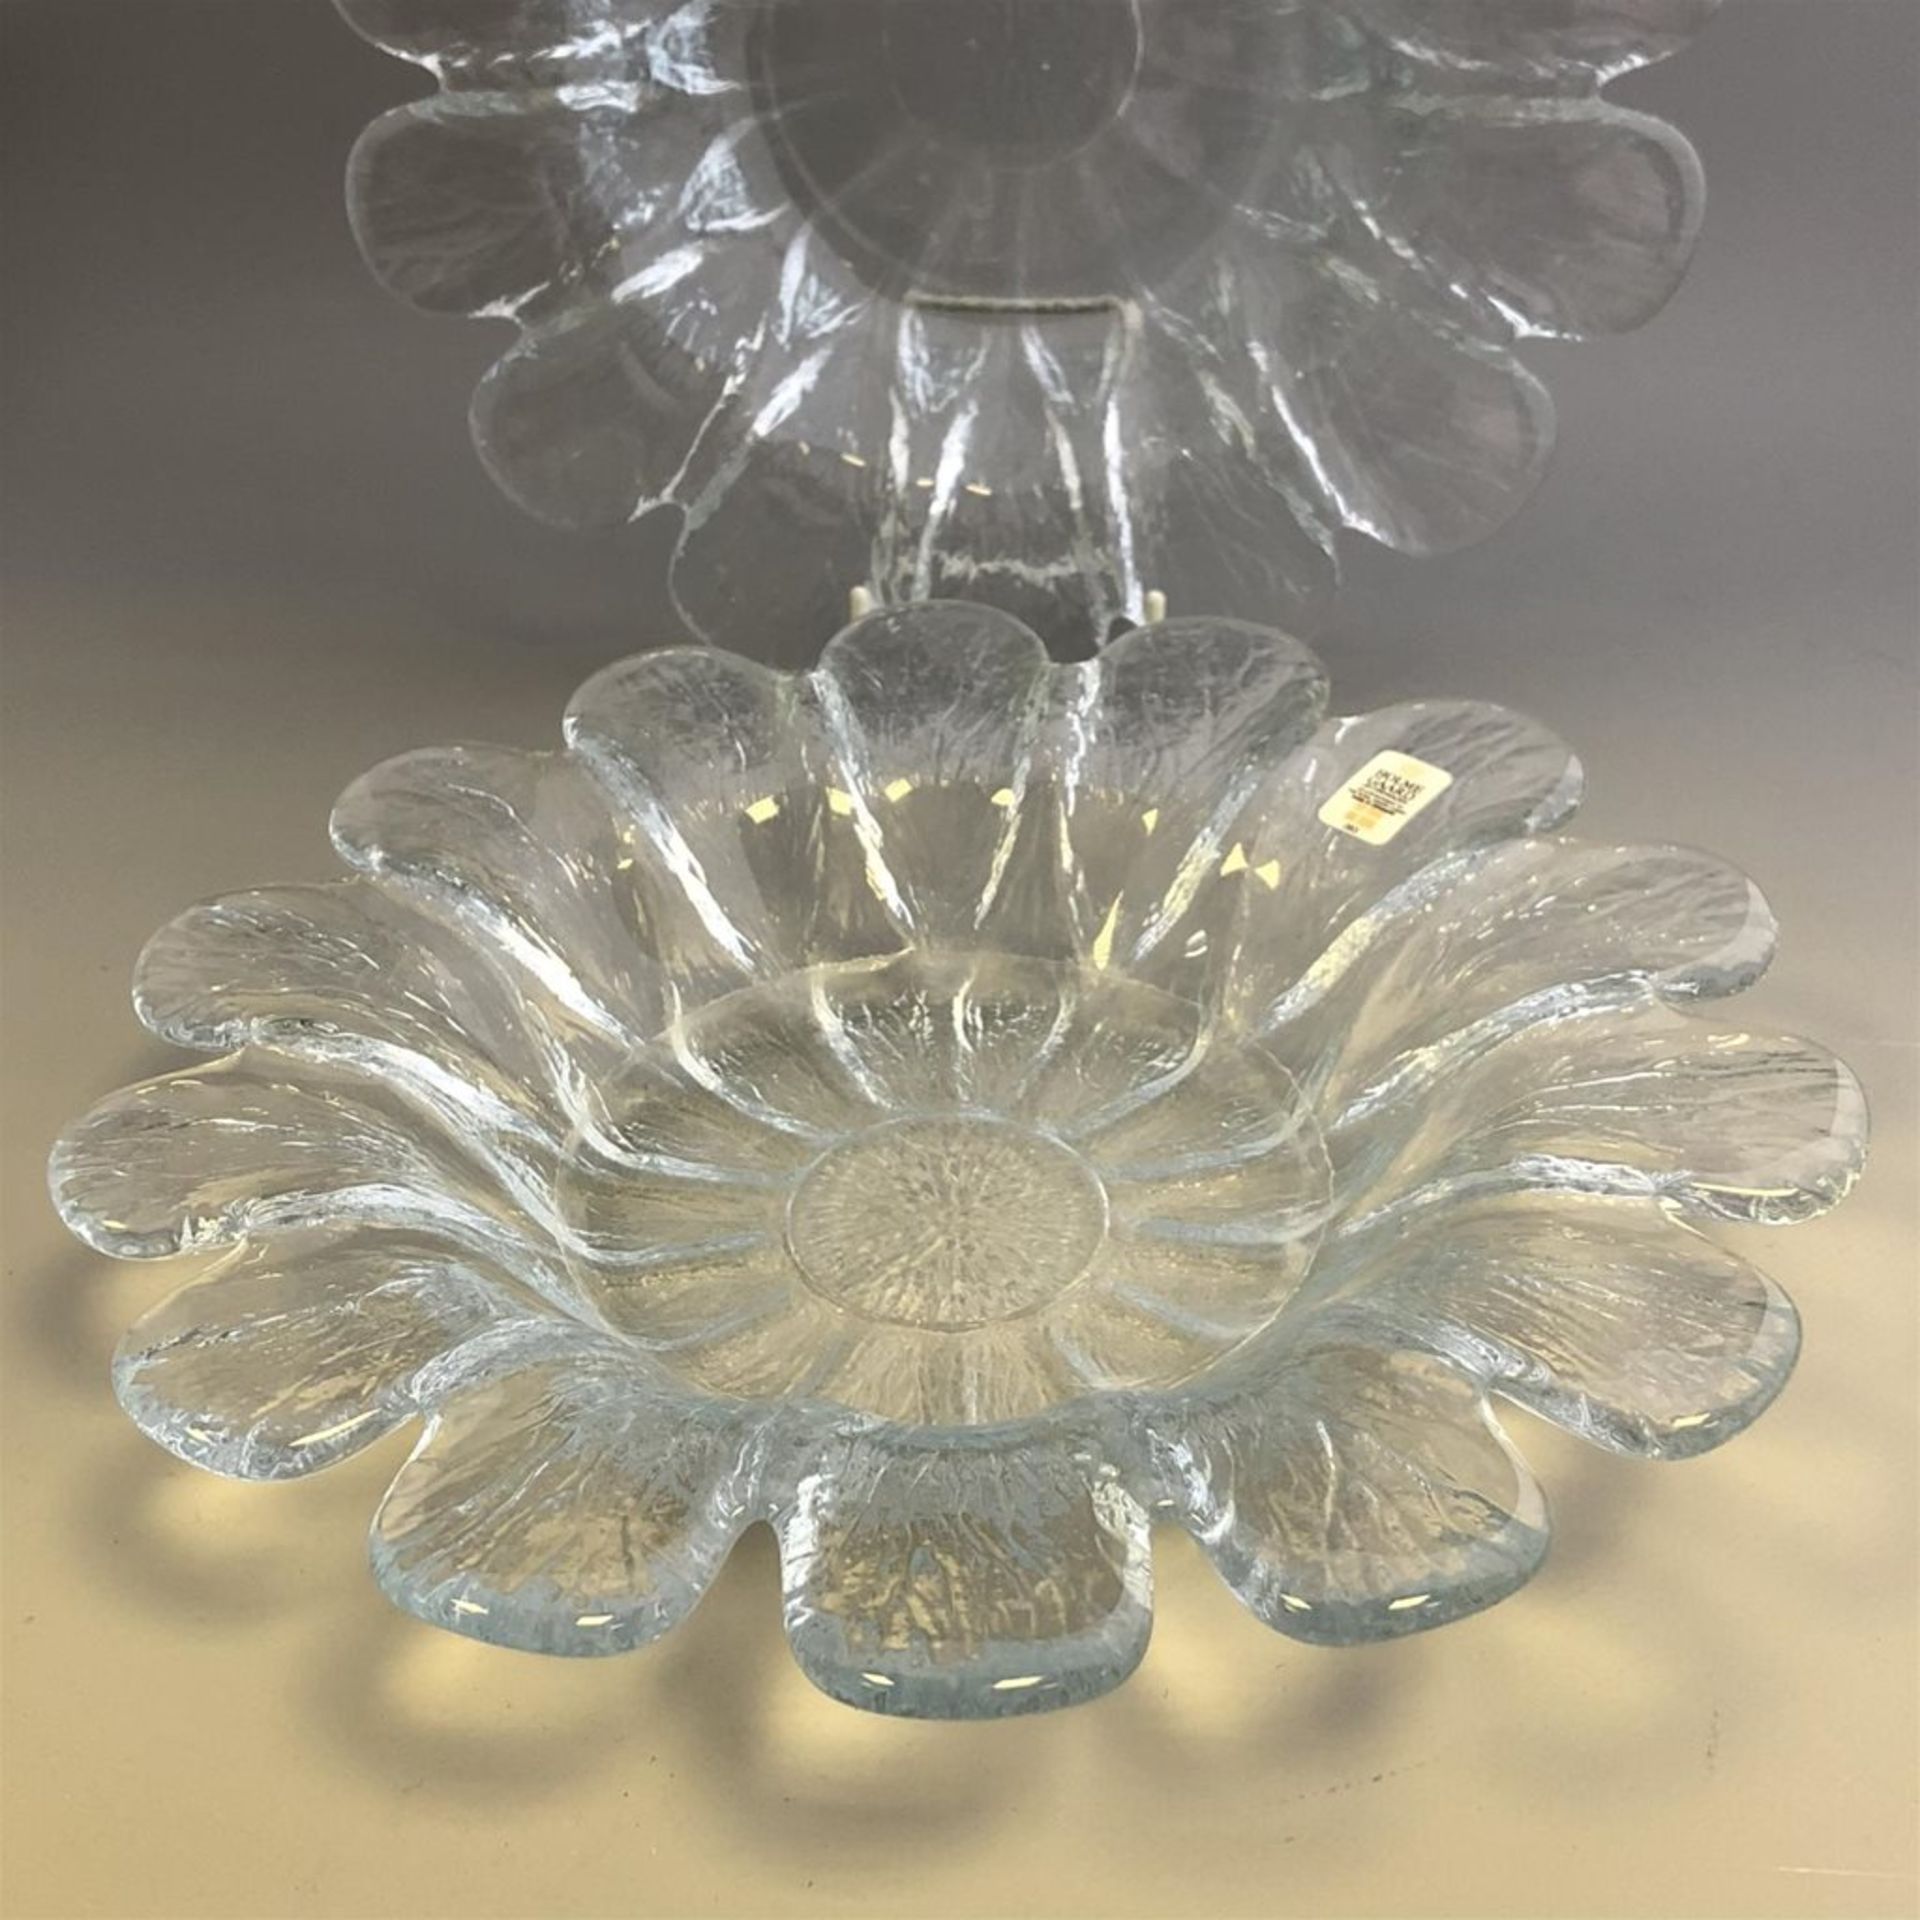 Pair of Art Glass Flower Bowls - Holmegaard - Denmark